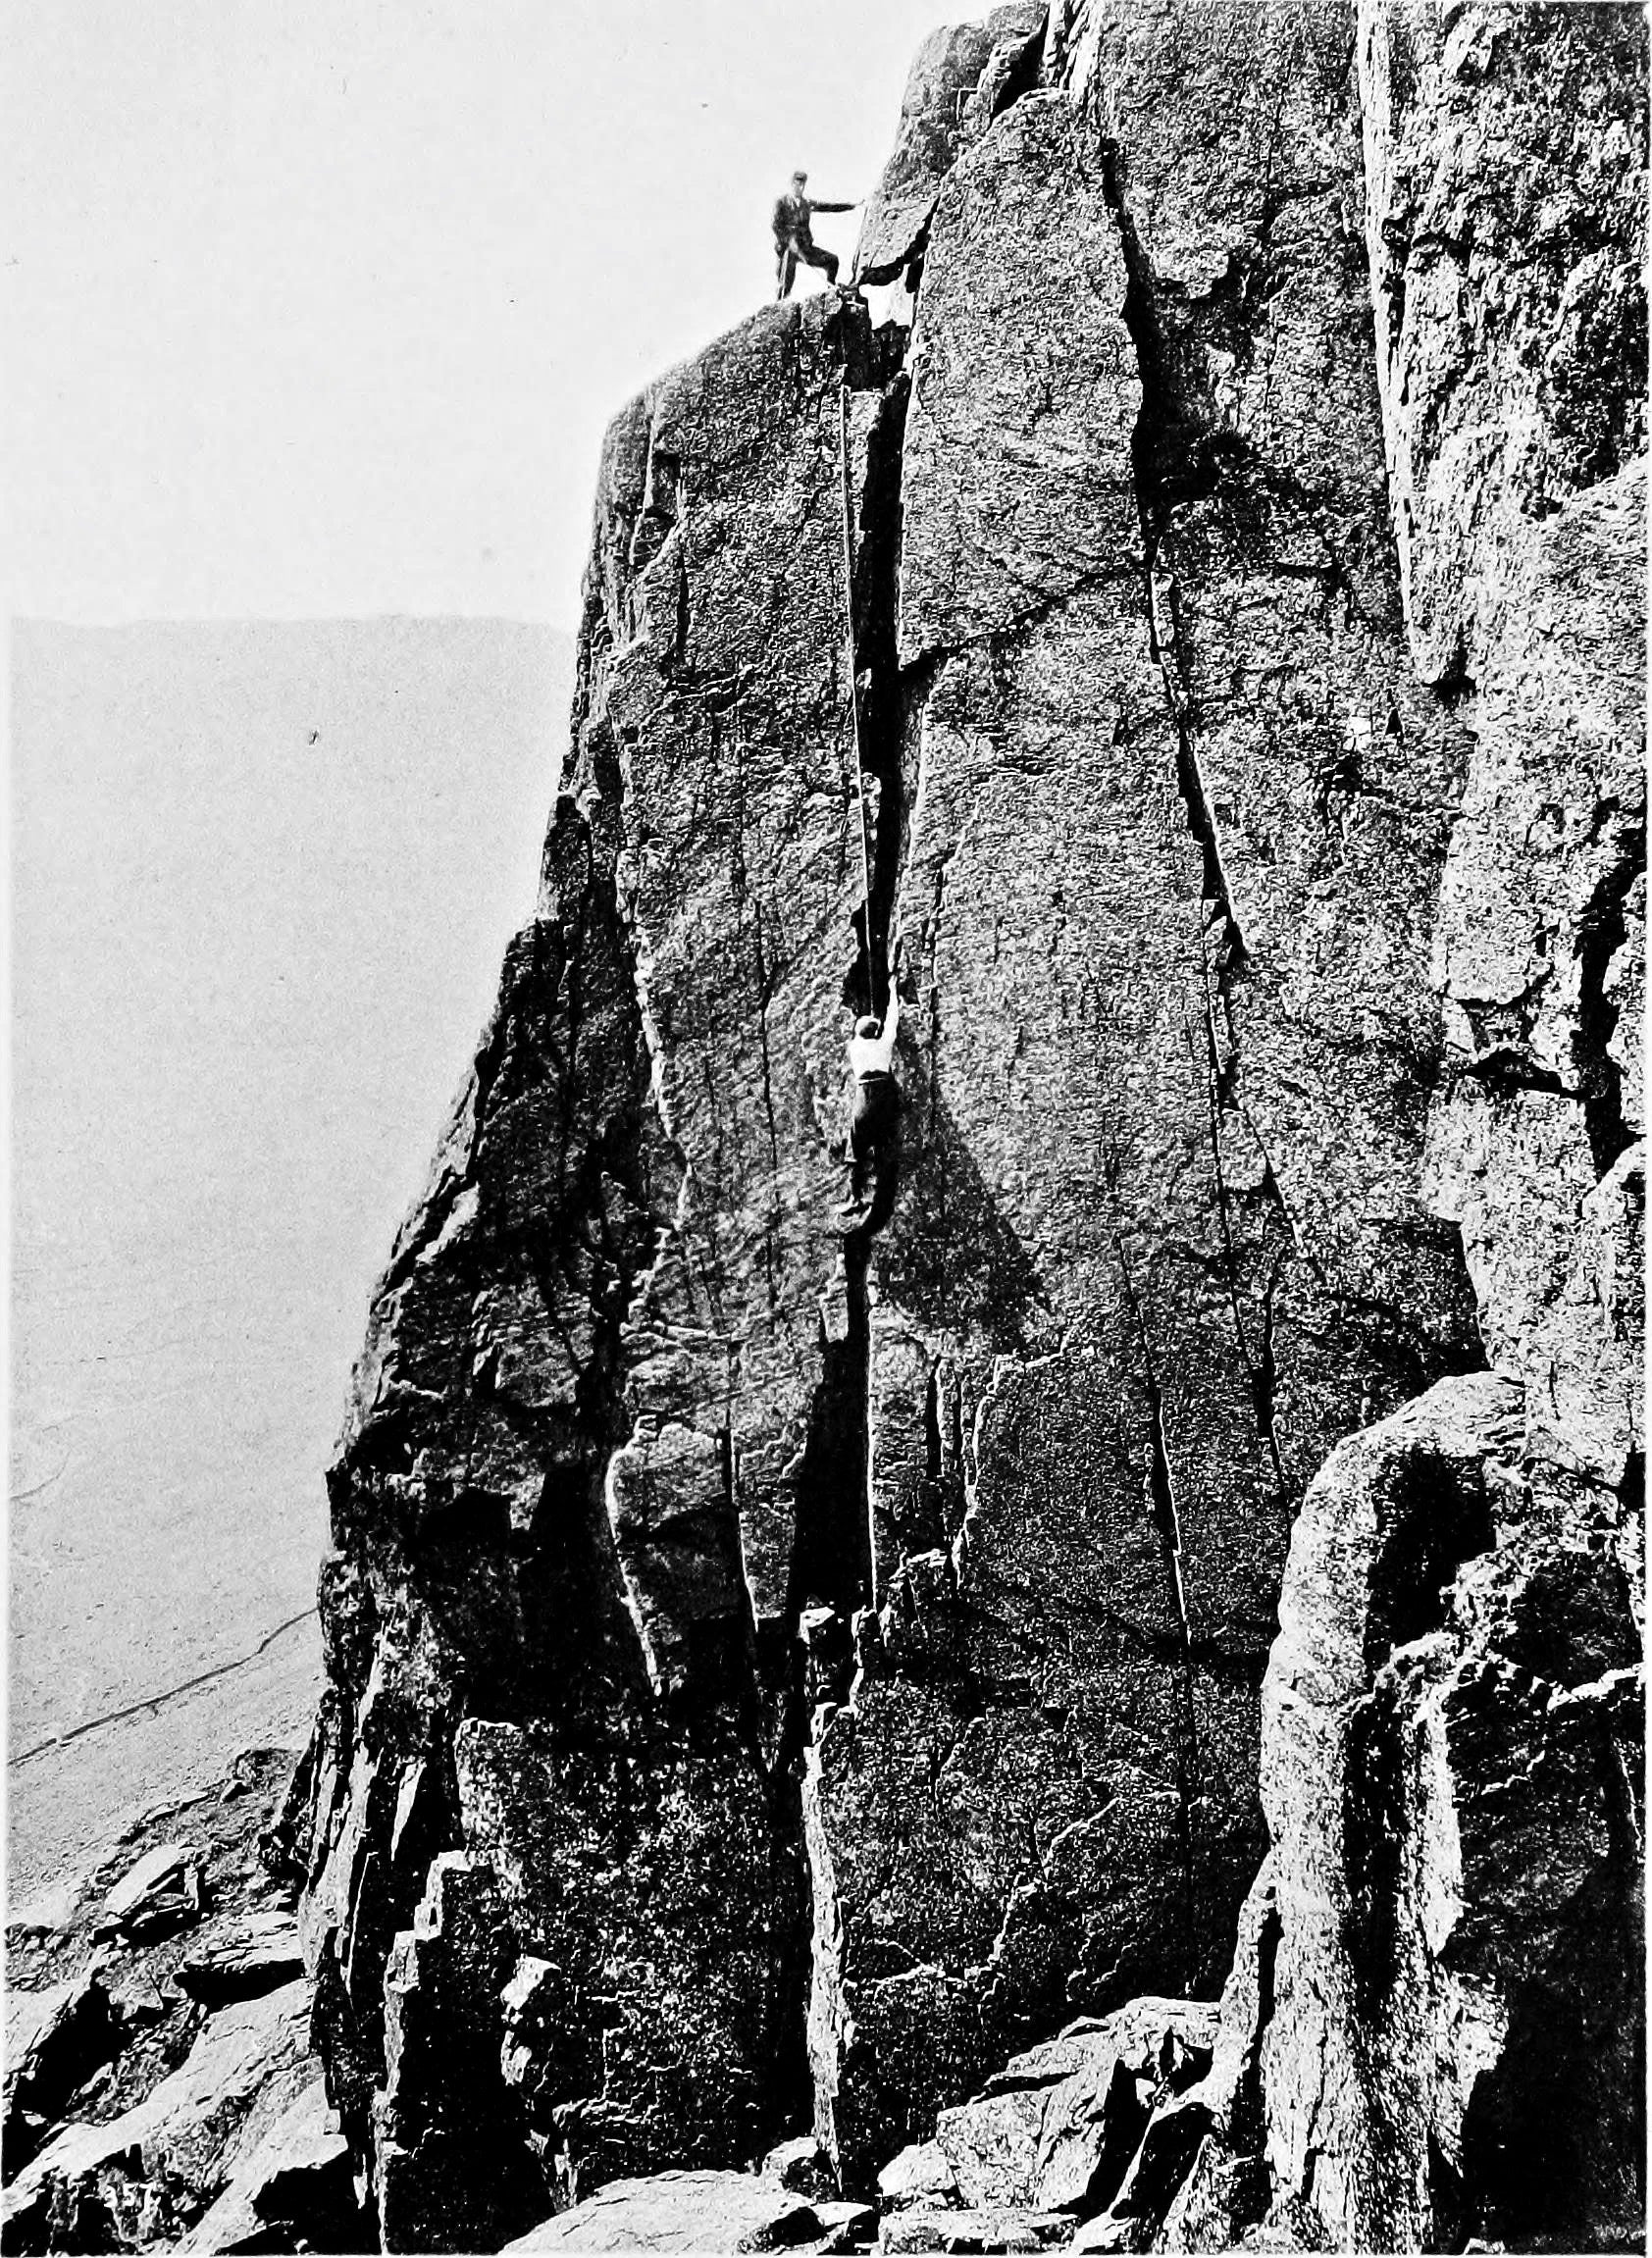 The Lake District rock climbing